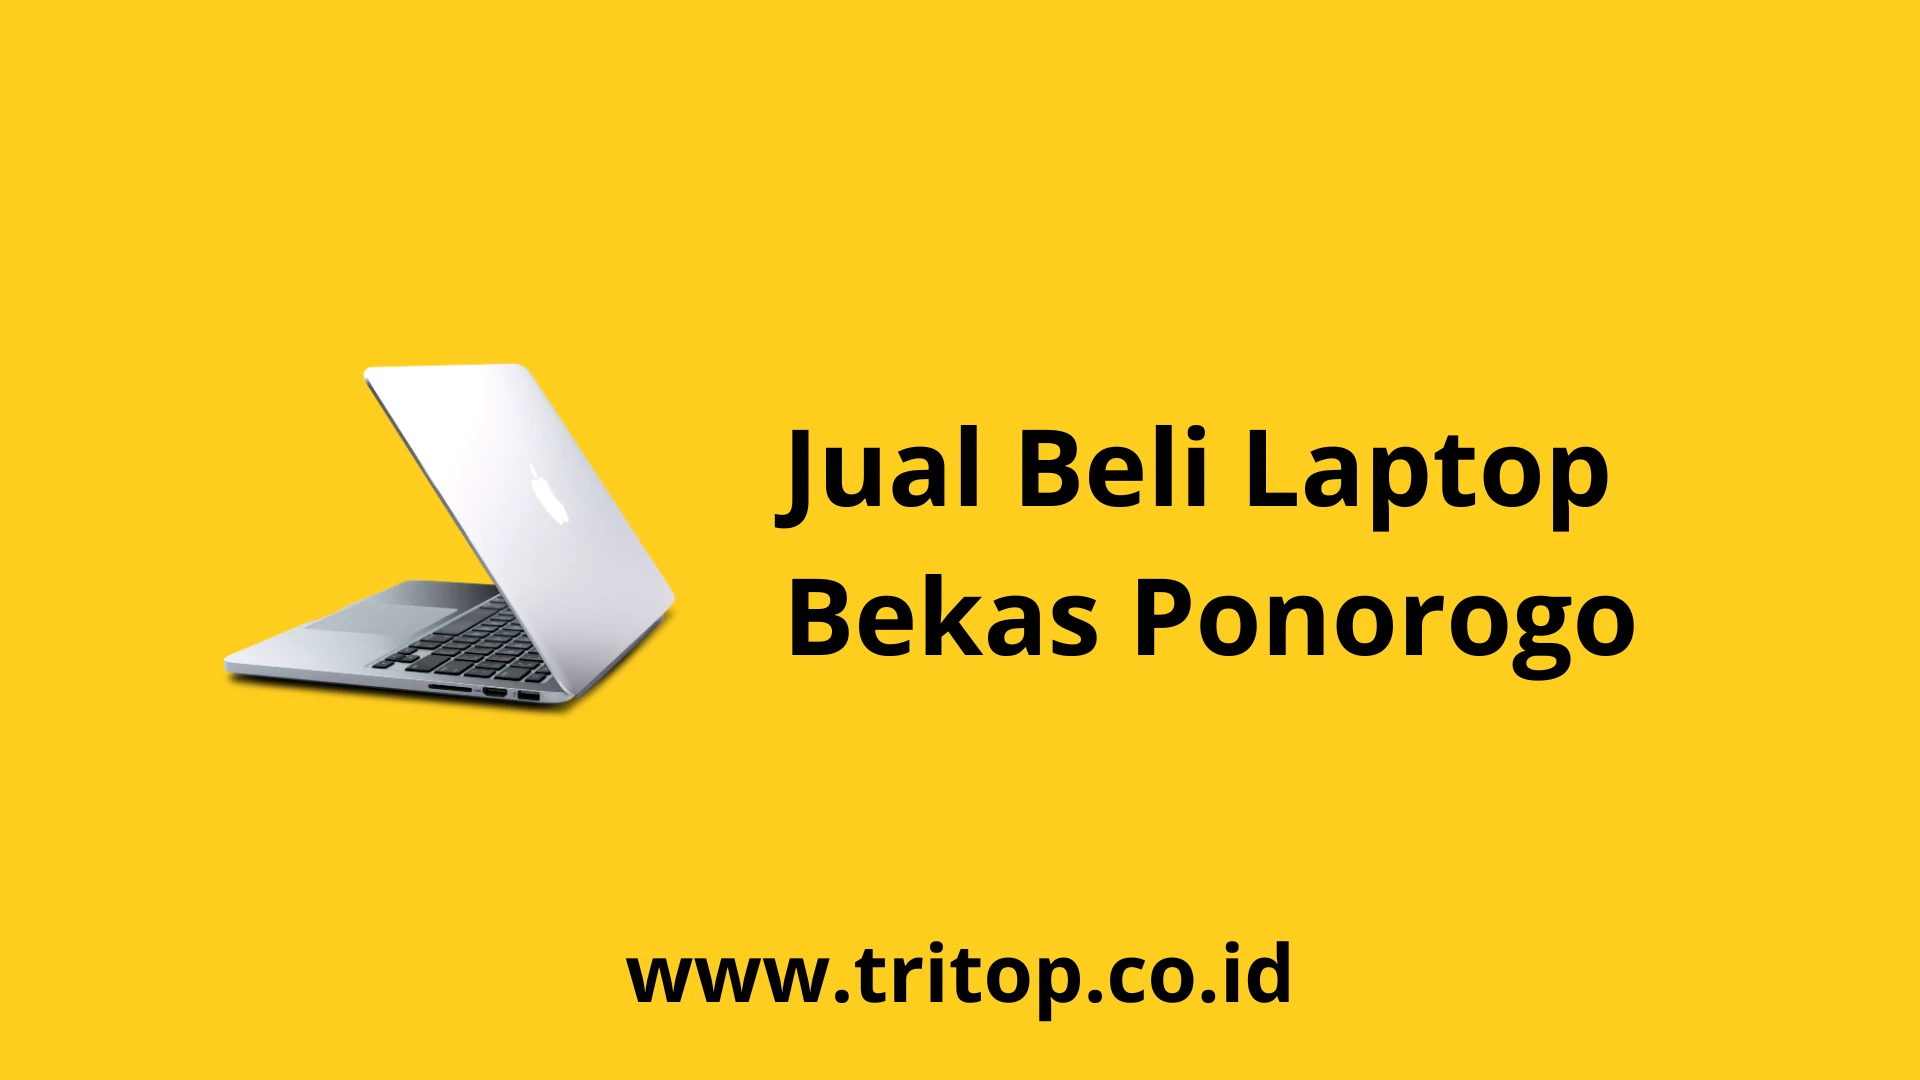 Jual Beli Laptop Bekas Ponorogo www.tritop.co.id